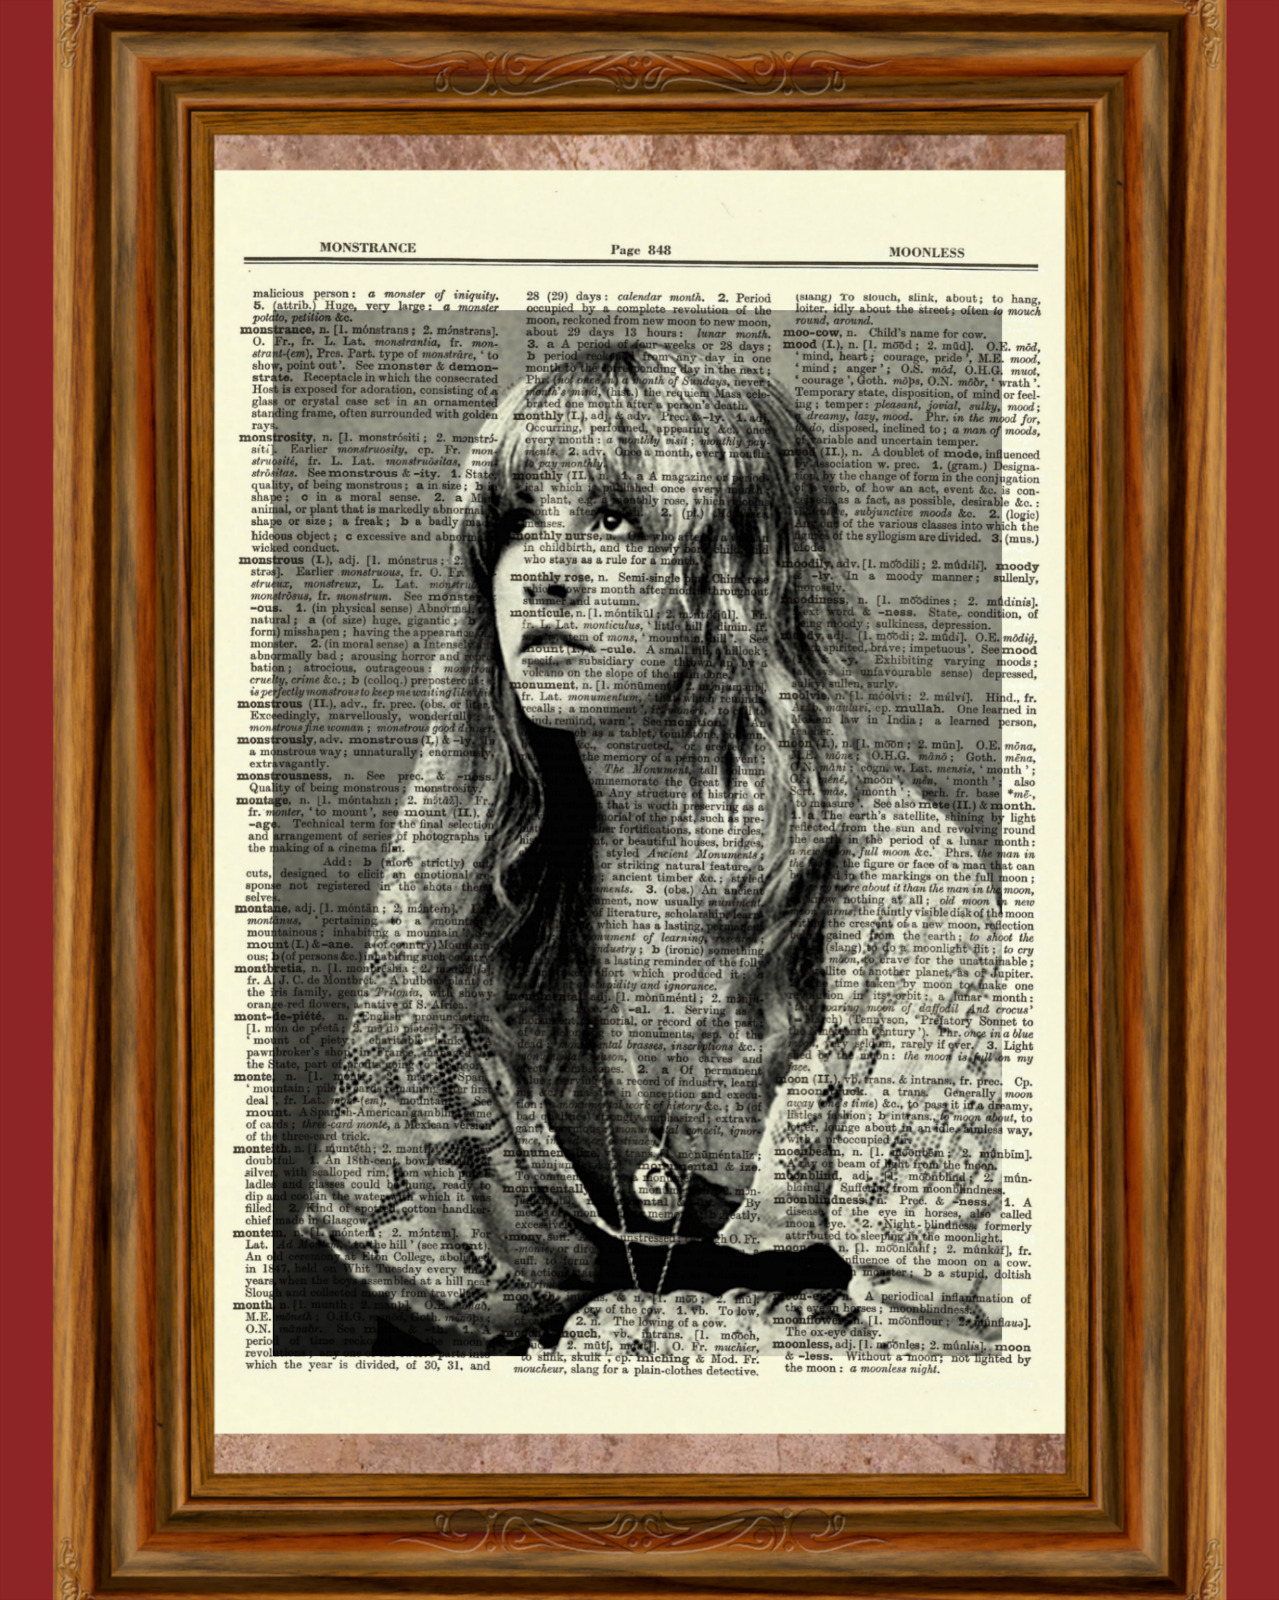 Stevie Nicks Vintage Dictionary Art Print Poster Picture Fleetwood Mac Singer